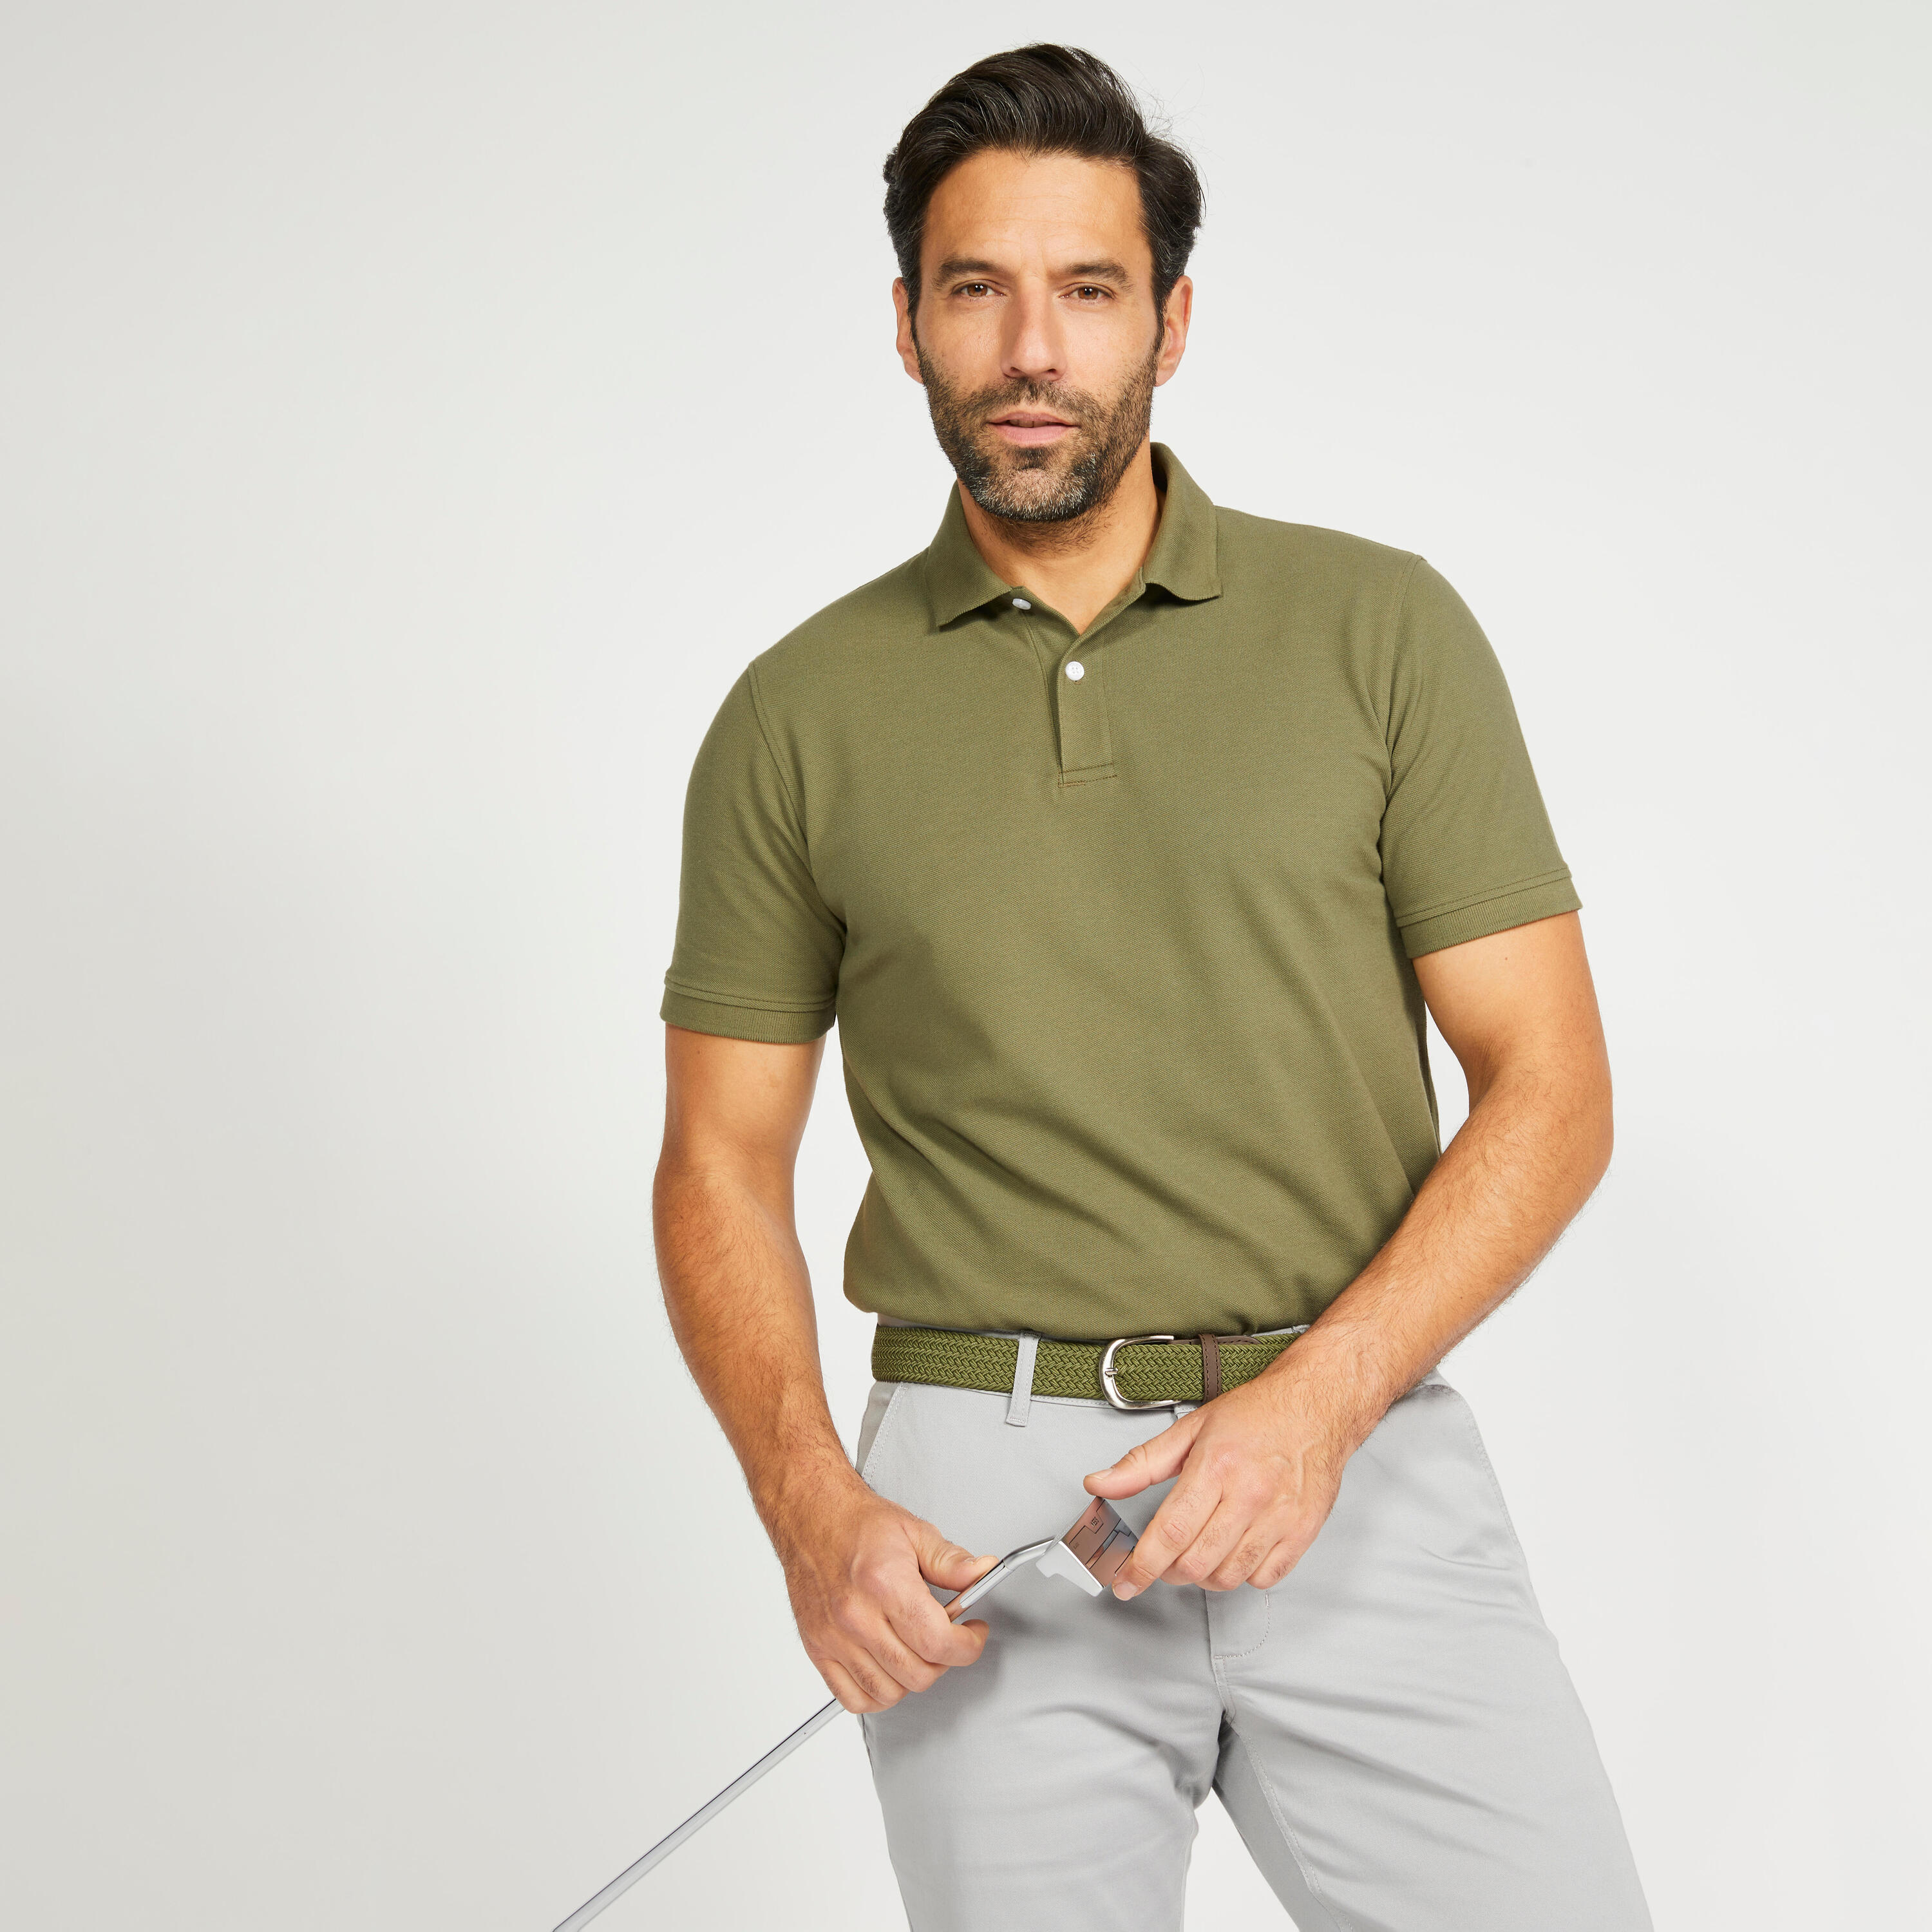 INESIS Men's short-sleeved golf polo shirt - MW500 khaki